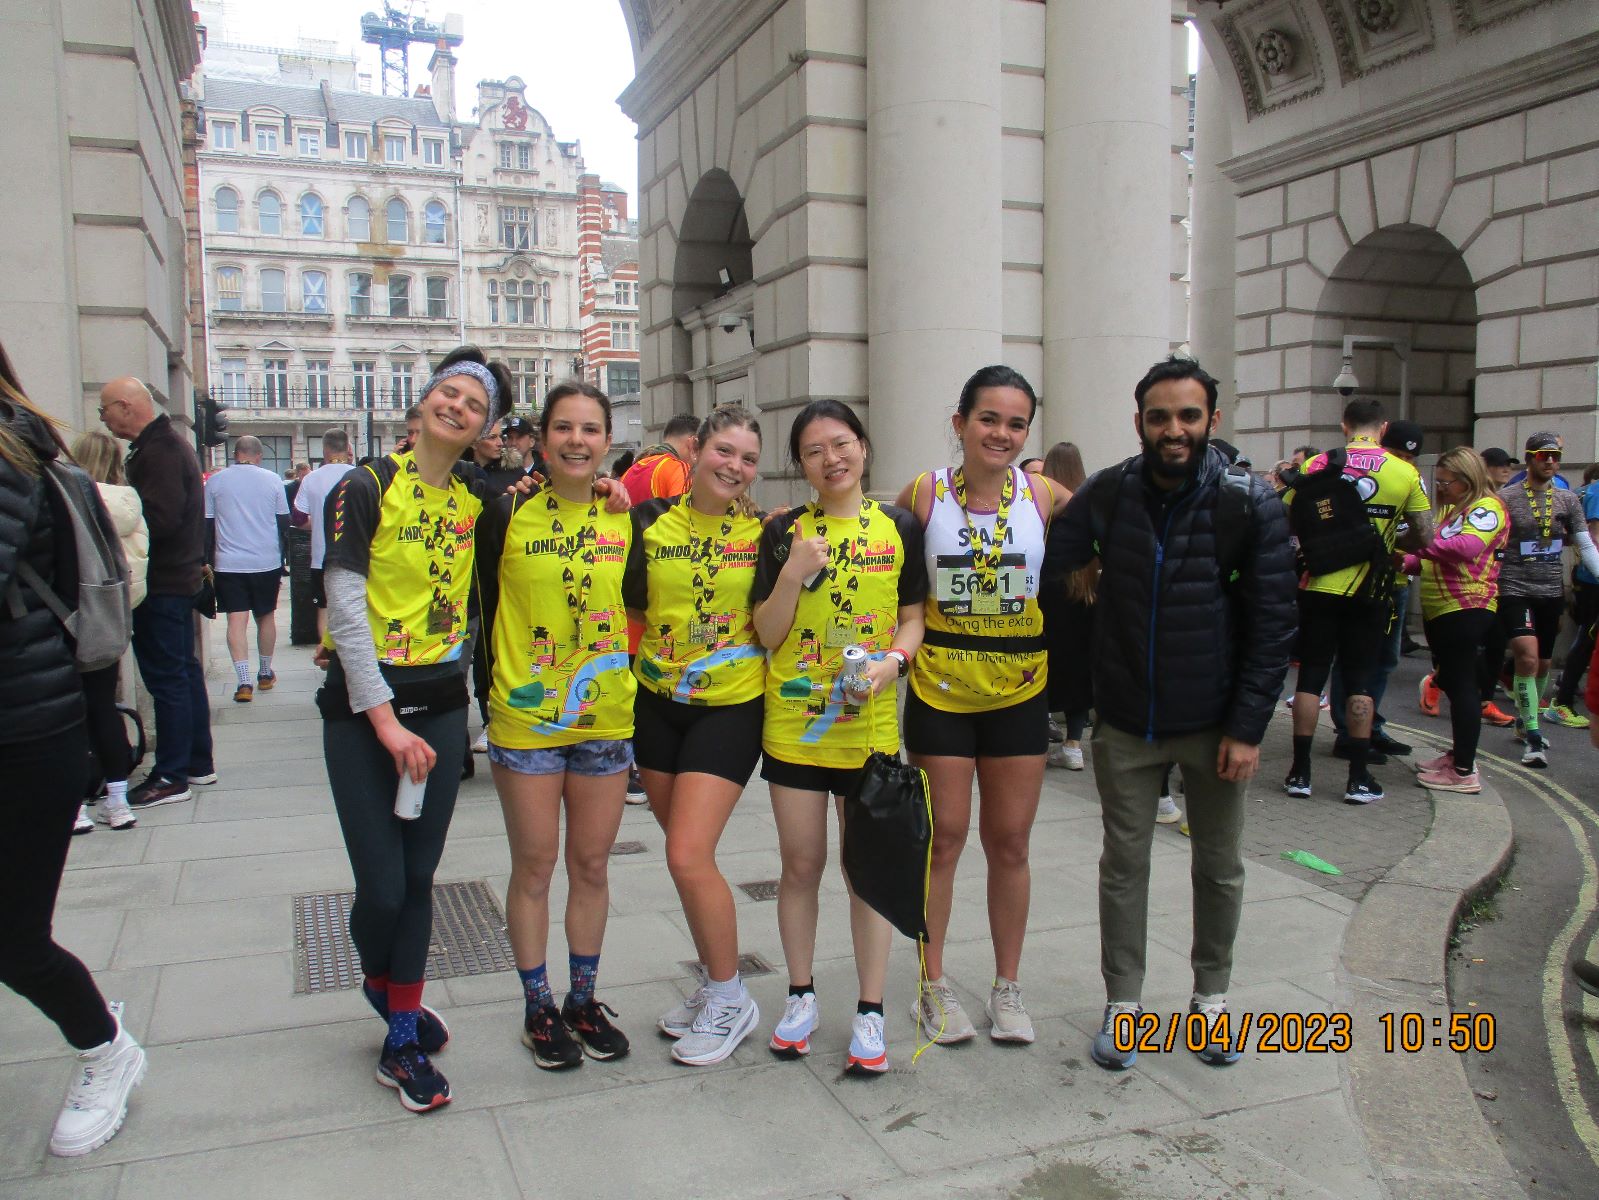 A group photo of the London Landmarks Half Marathon team